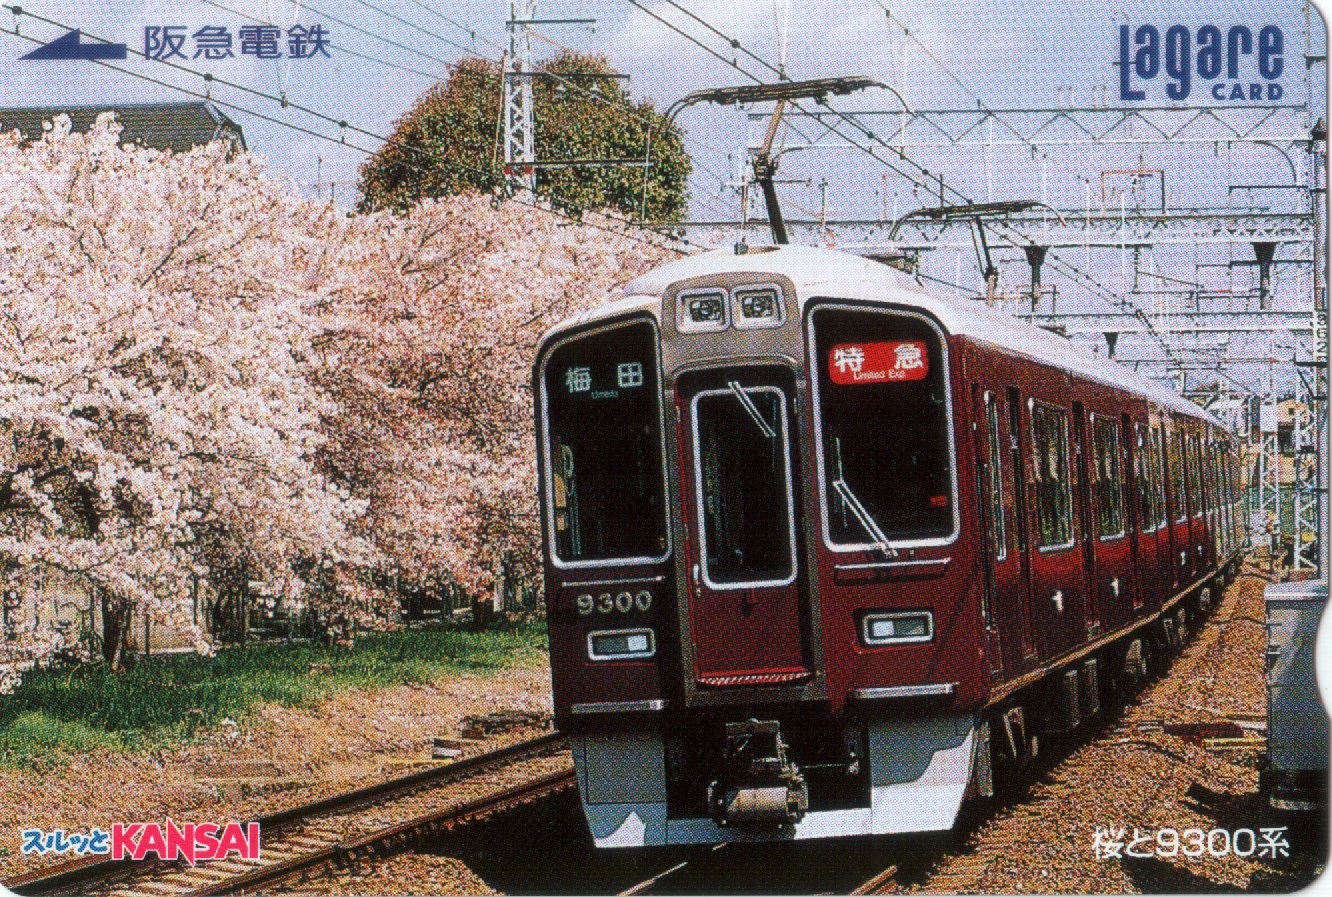 Hankyu 9300 series and Cherry blossom